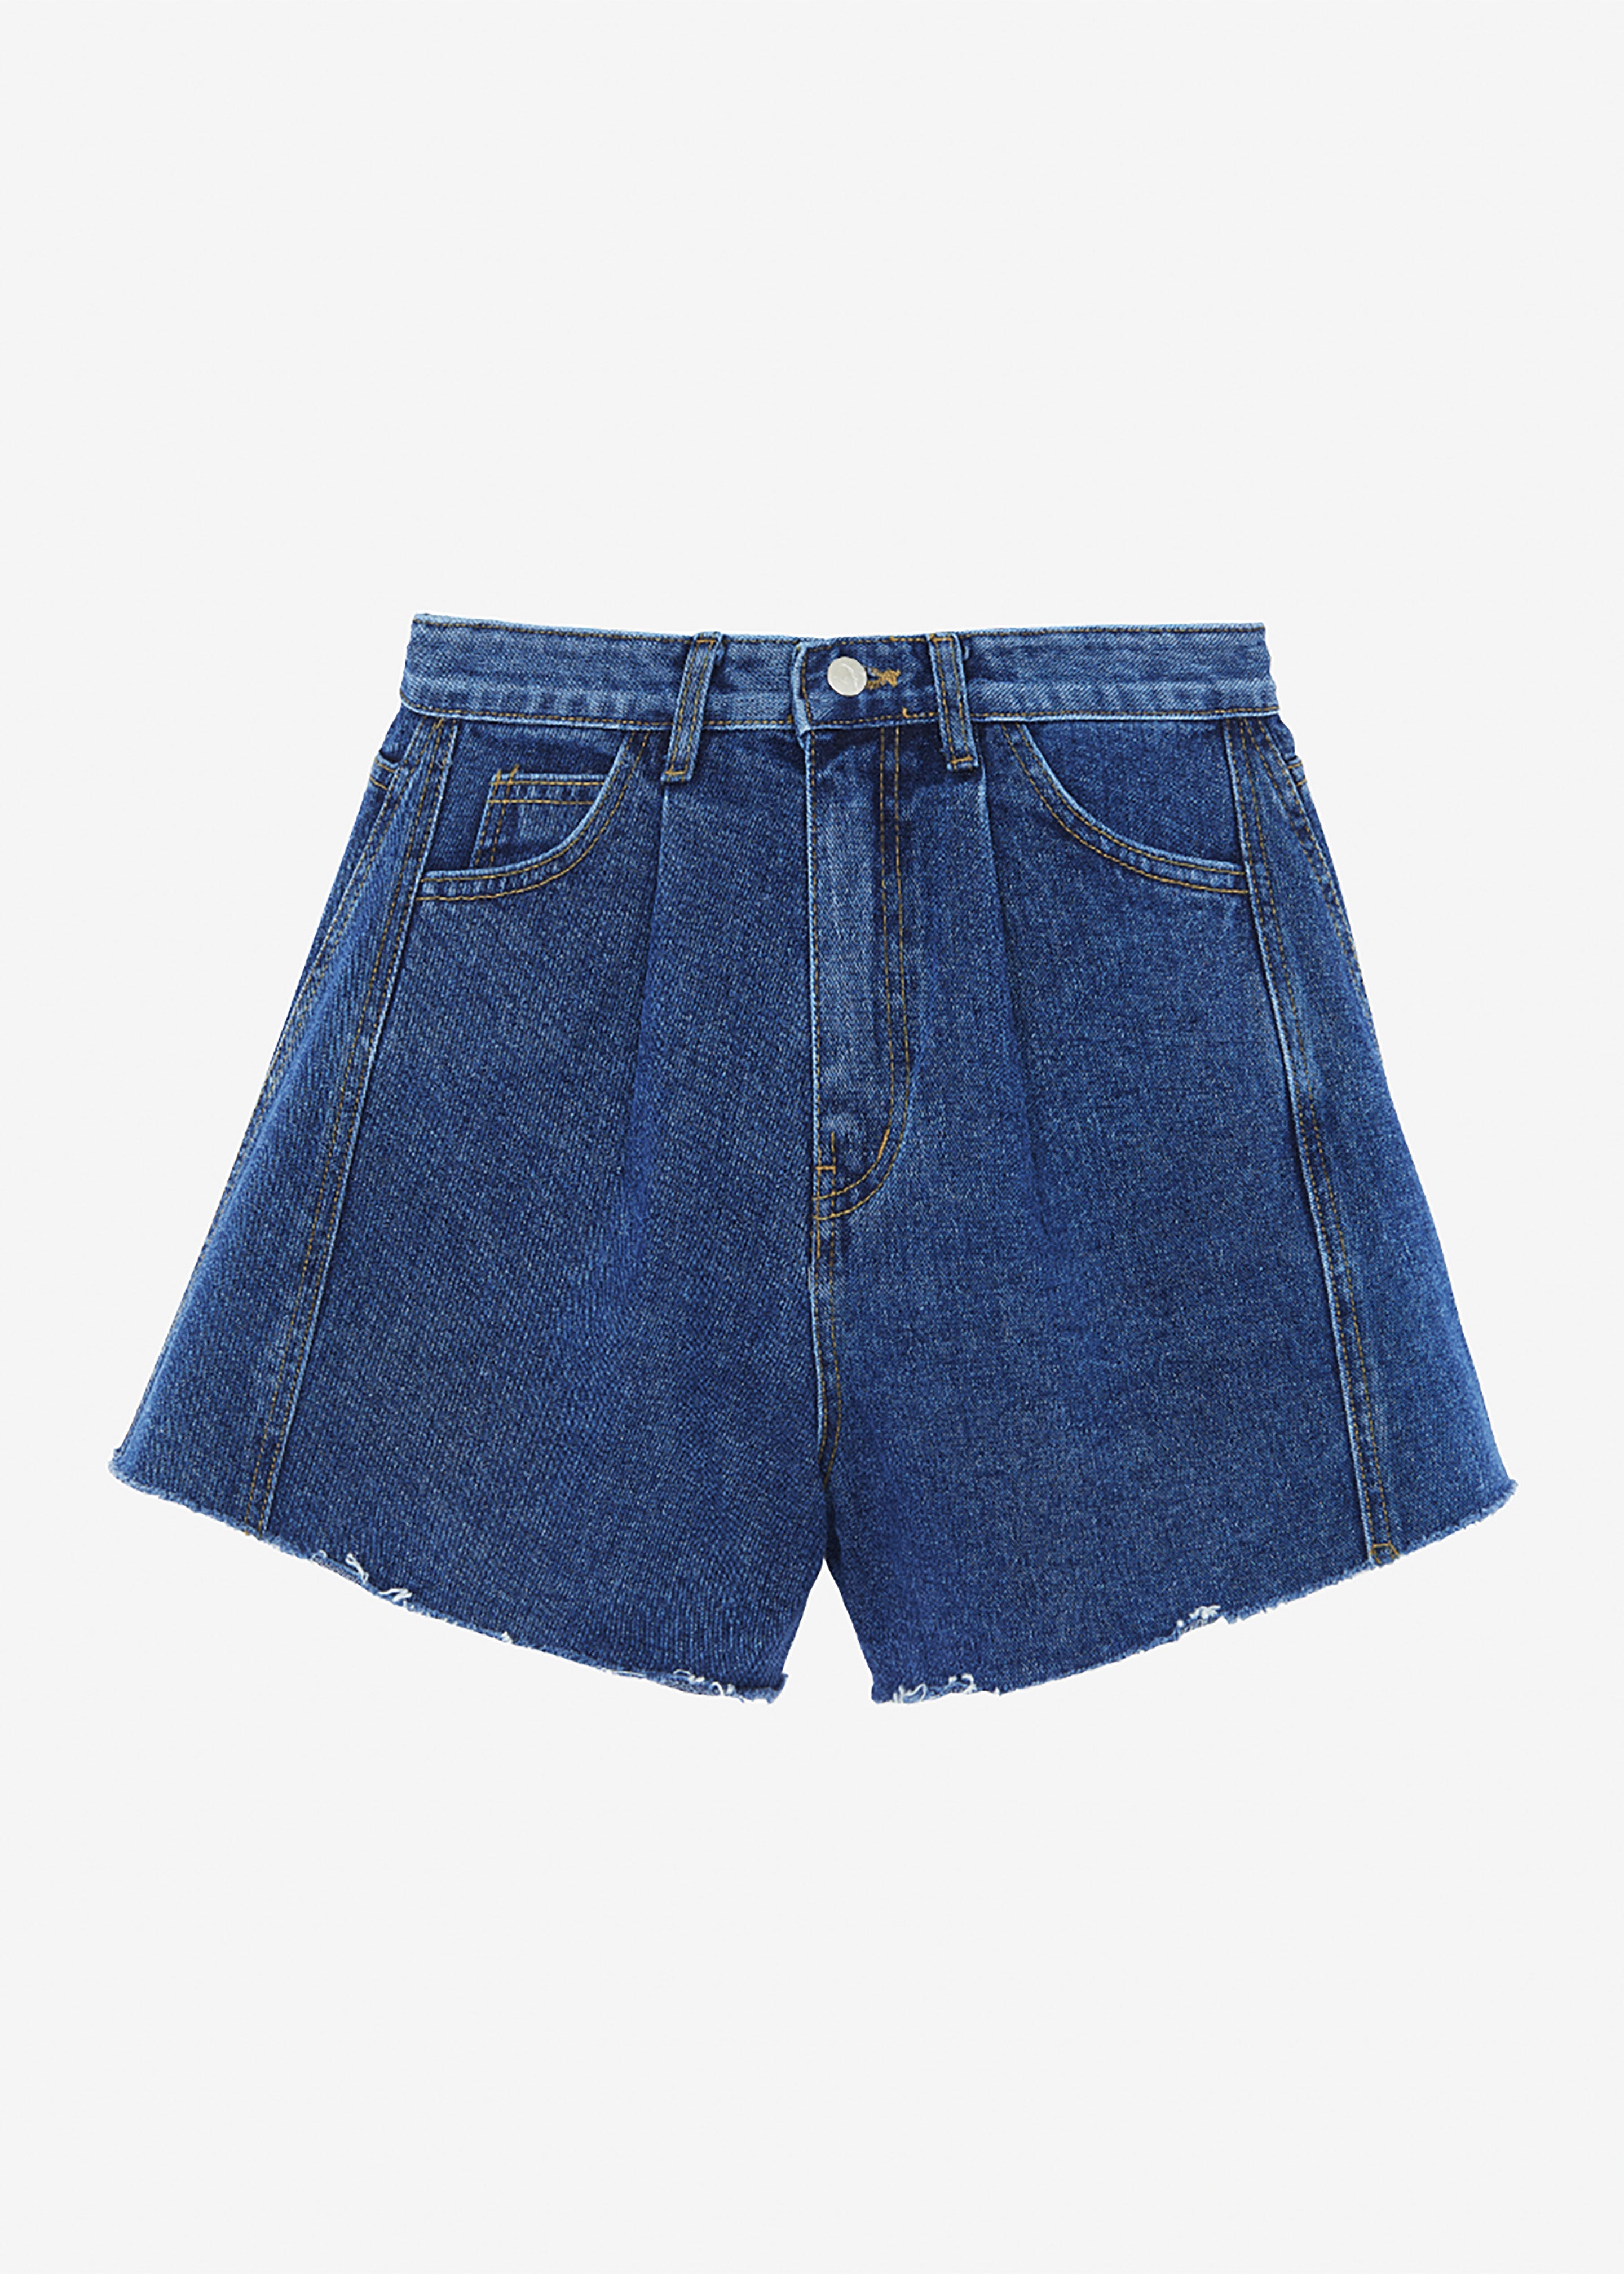 Howell Denim Shorts - Blue Denim - 7